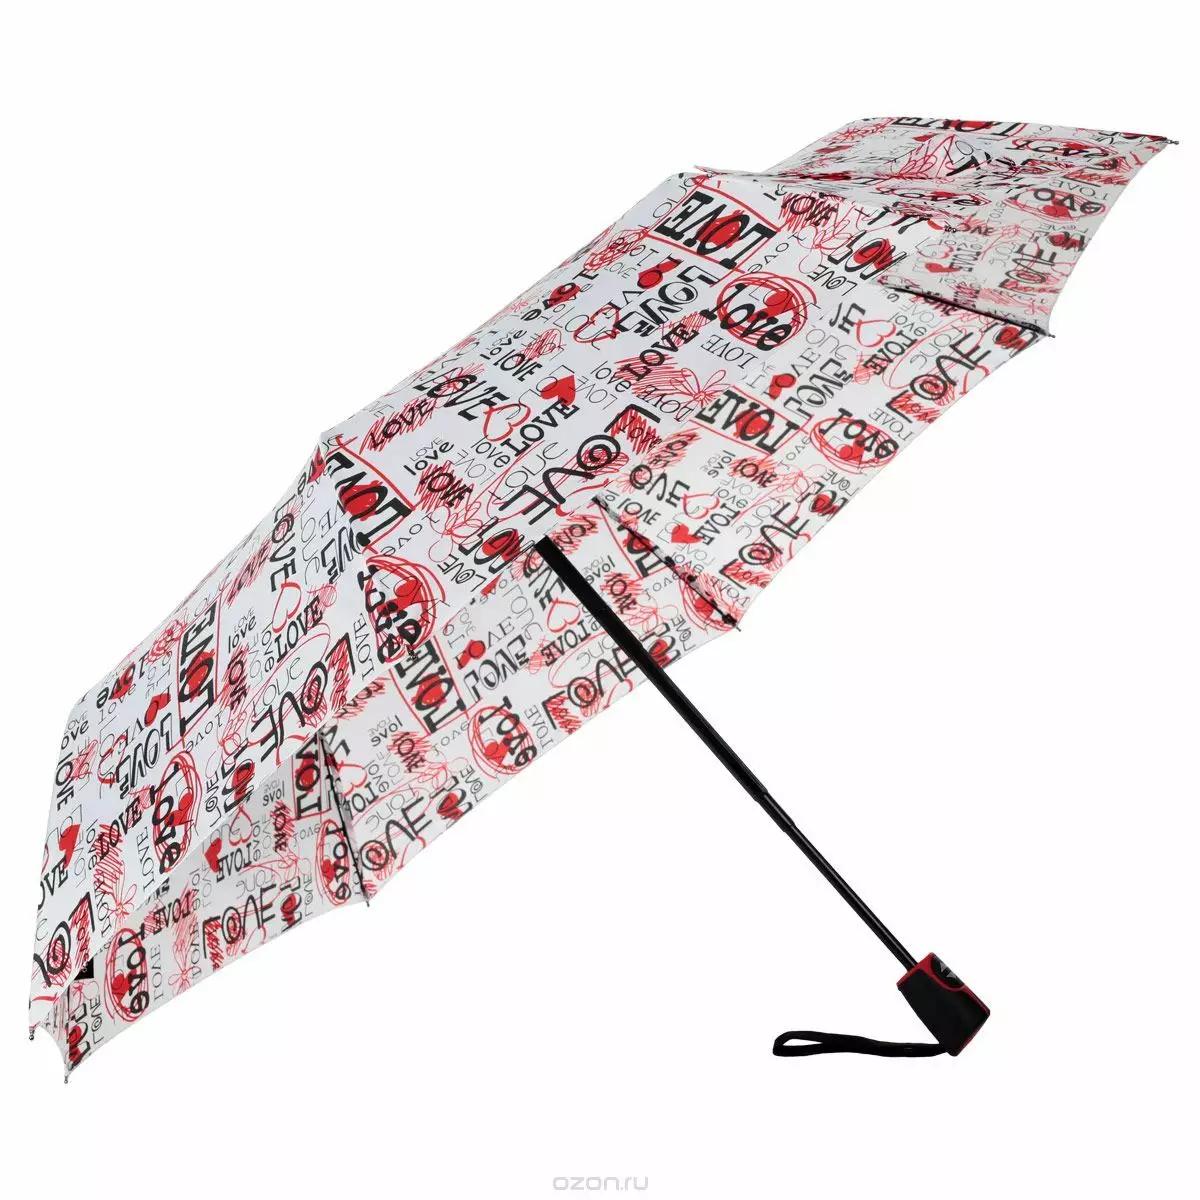 Doppler umbrellas (60 Ata): Tamaitai Faataitaiga Cane ma gagau, Dopler Iloiloga 15227_12